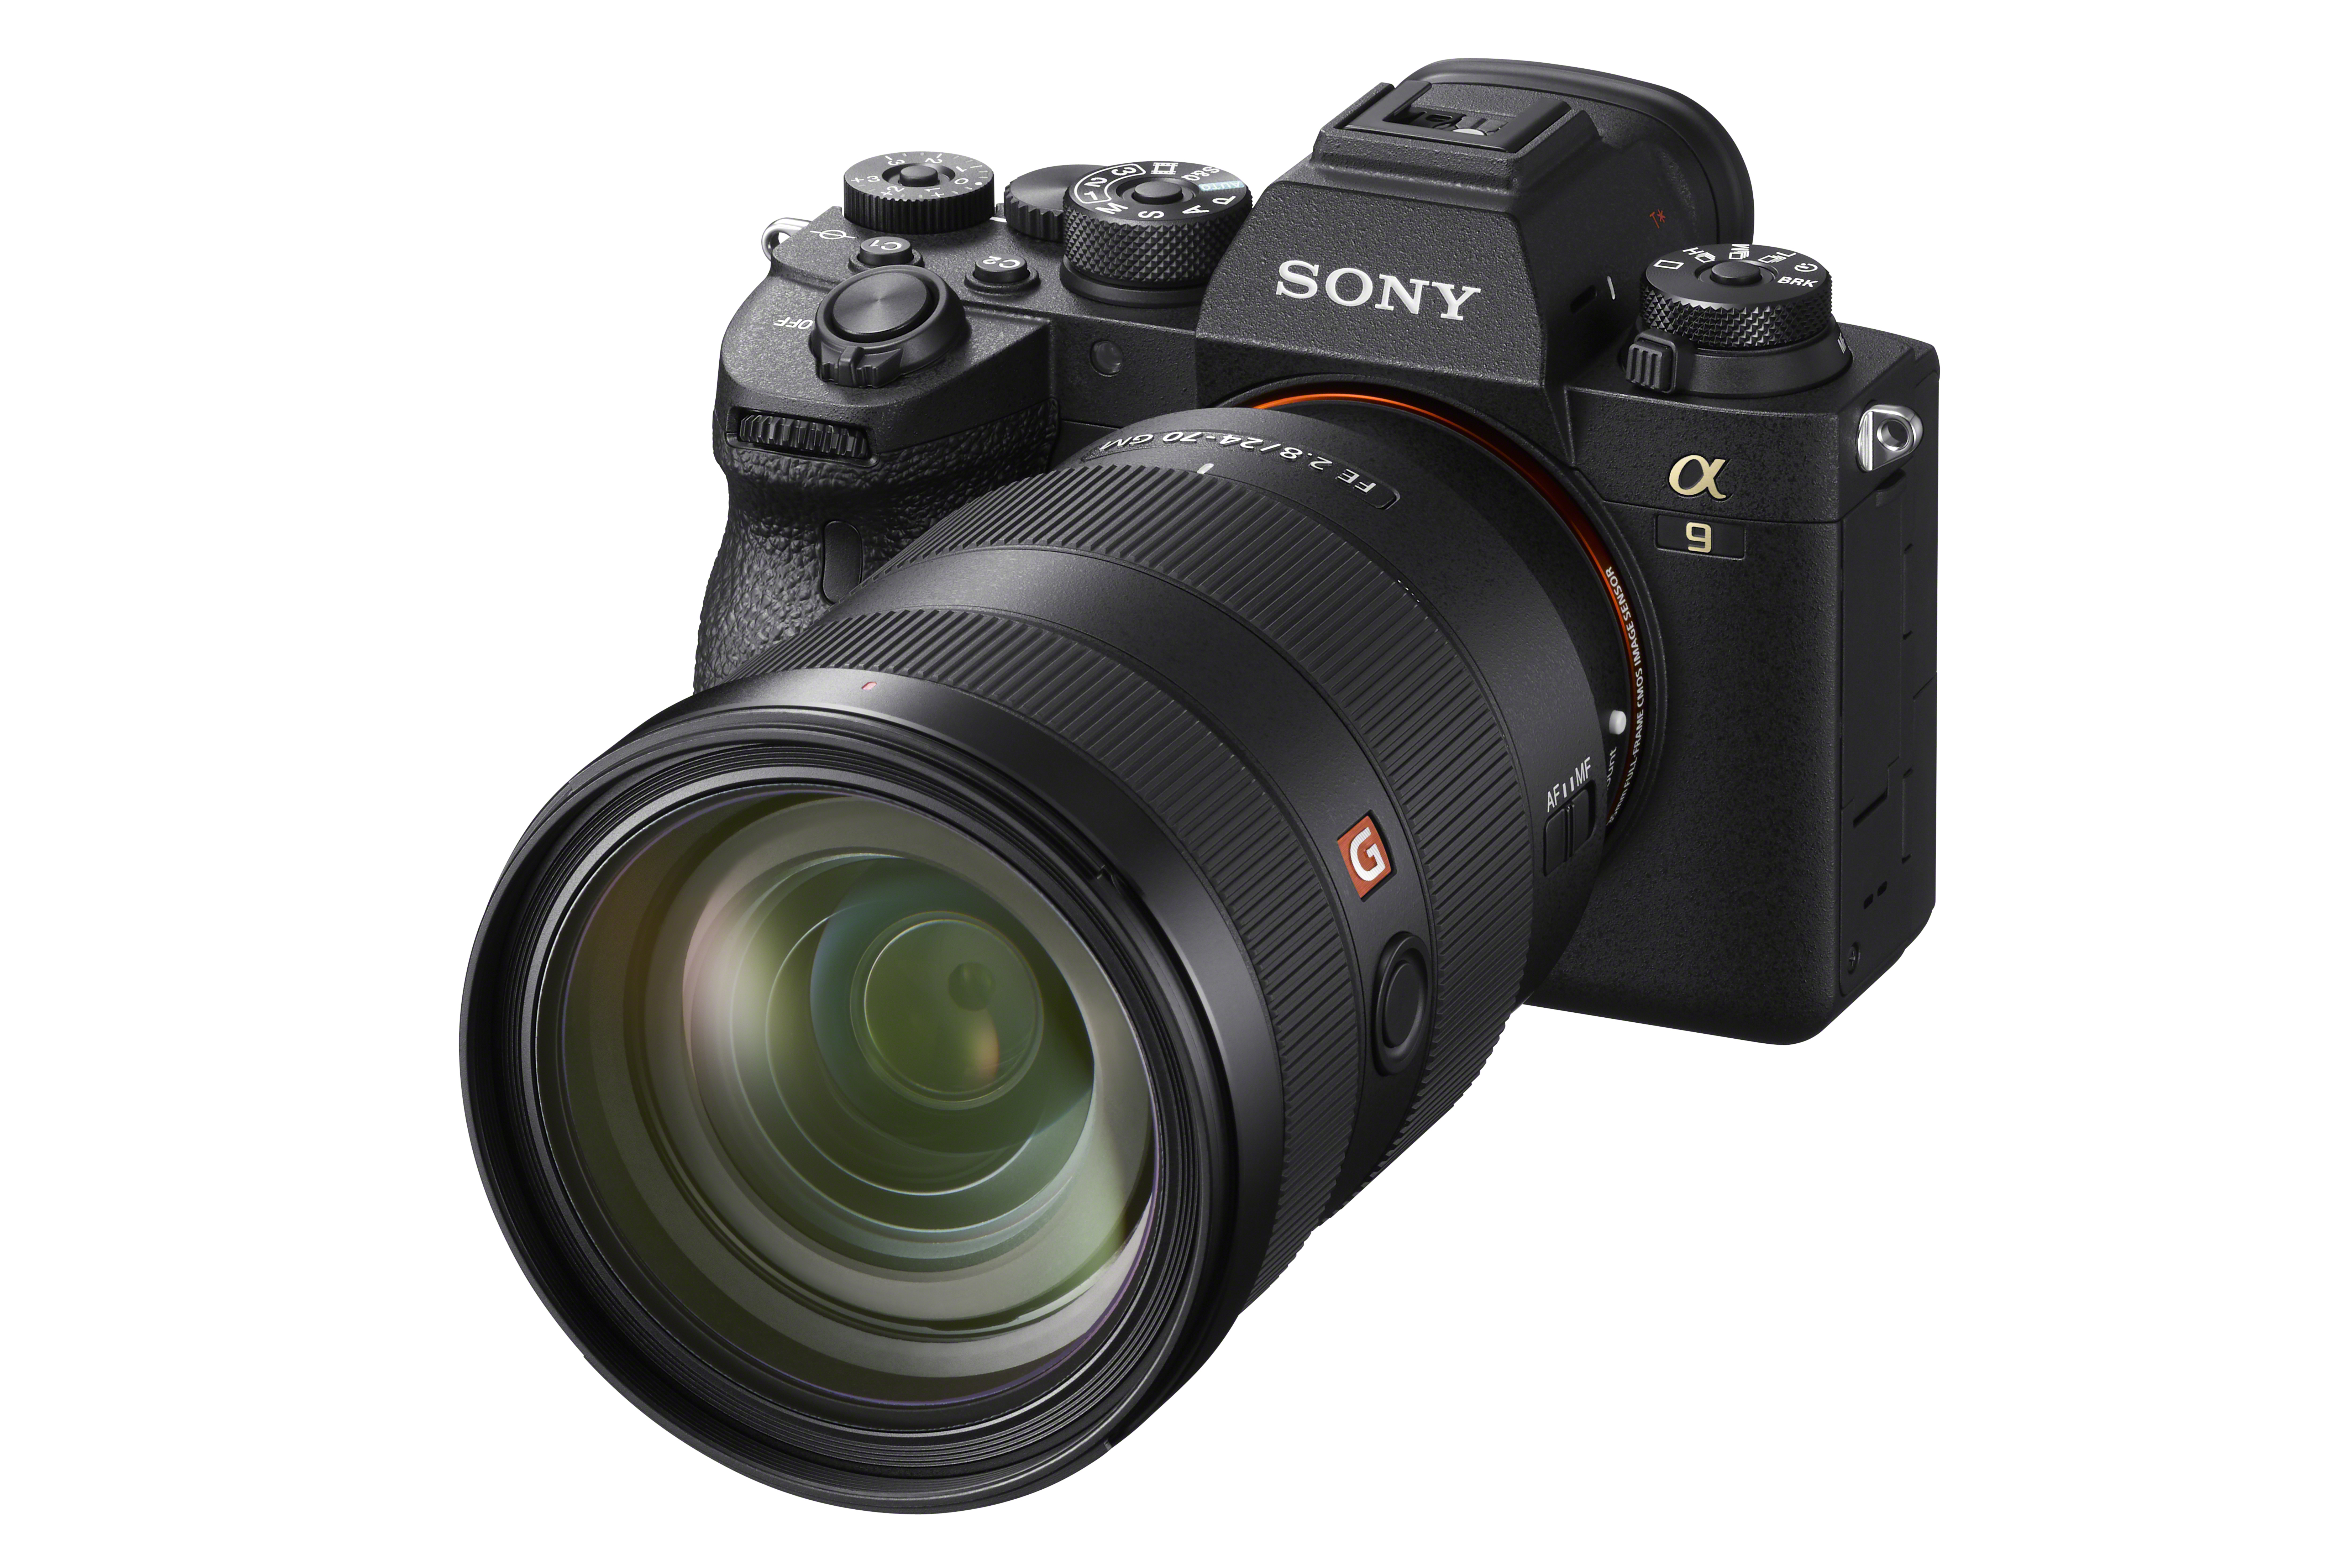 Best Sony camera: Sony A9 Mark II